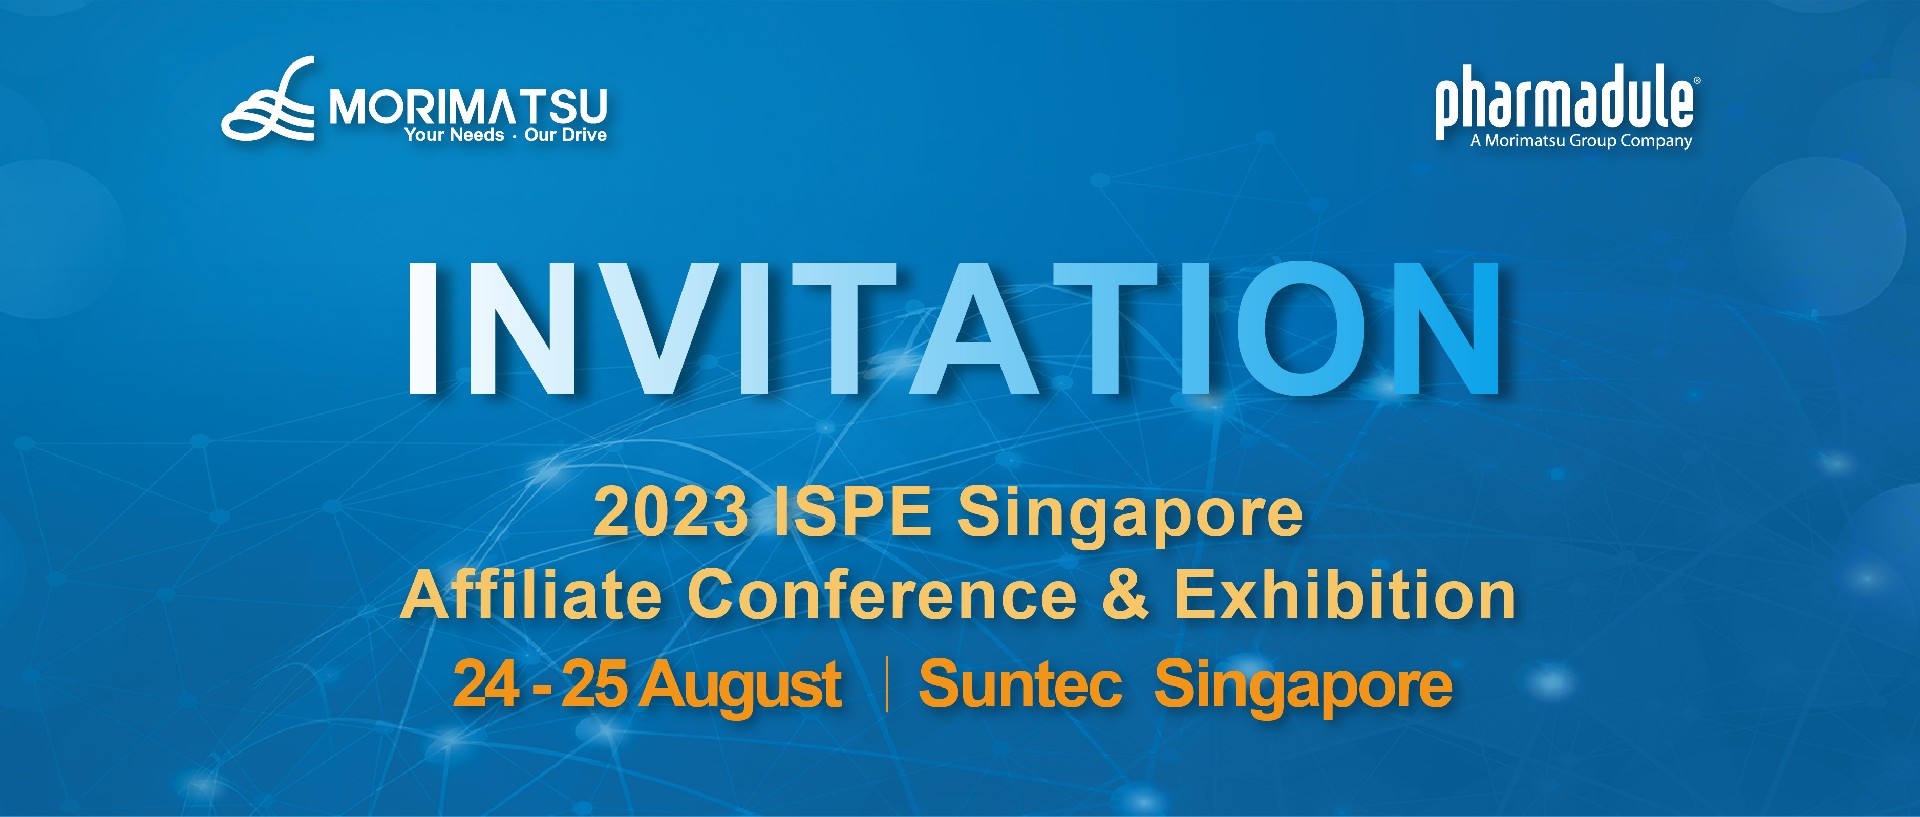 Invitation | Pharmadule Morimatsu AB Invites You to 2023 ISPE Singapore